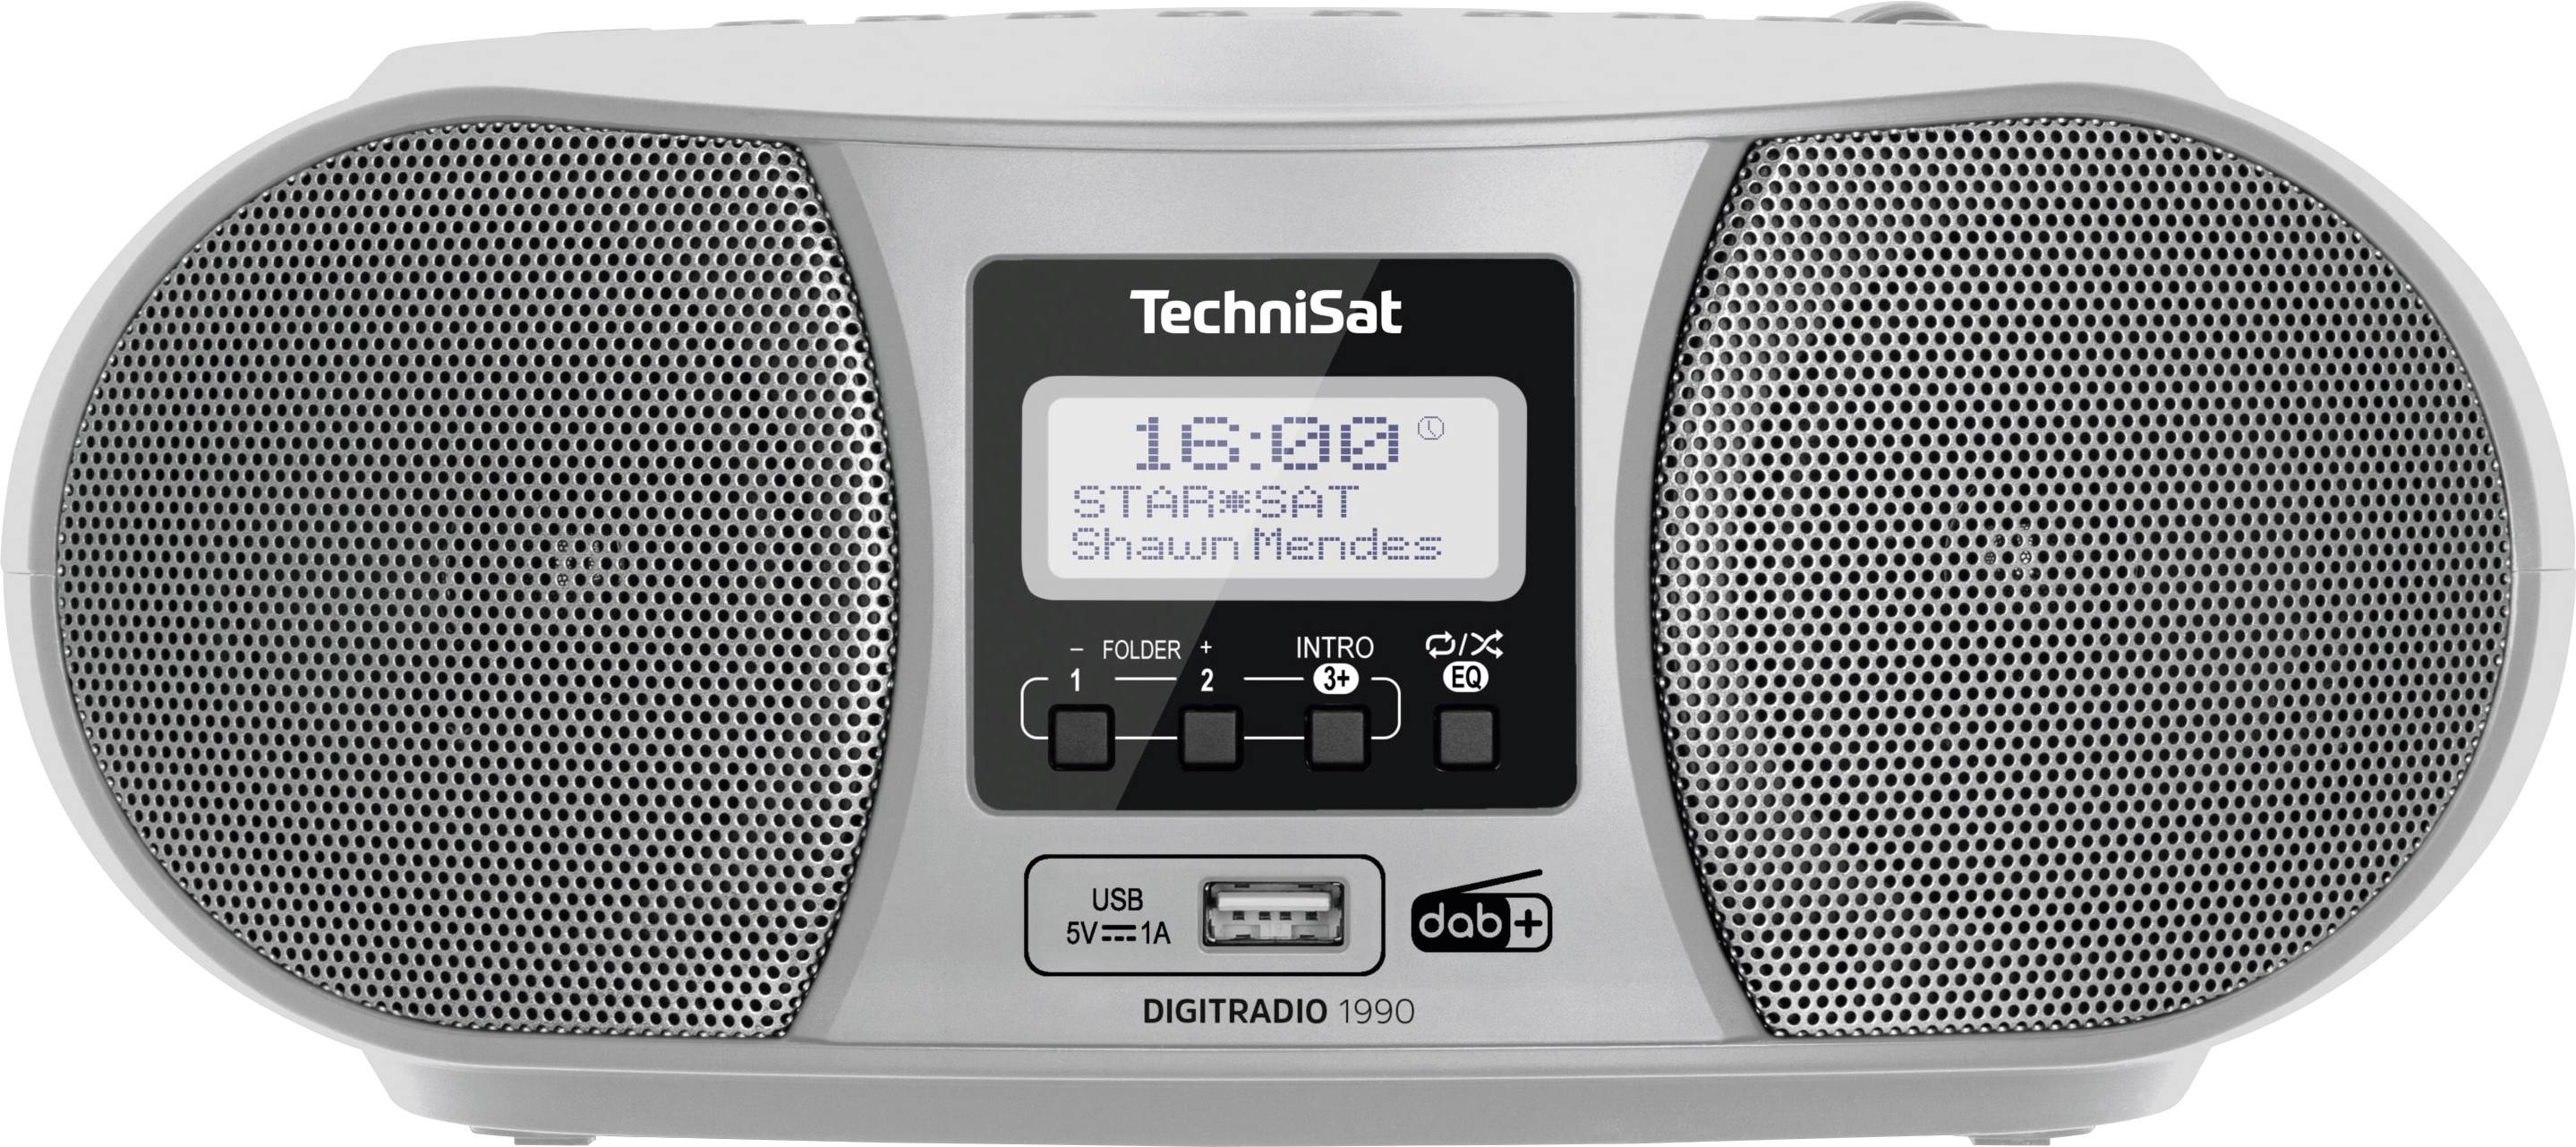 TechniSat DIGITRADIO 1990 Radio CD player DAB+, FM AUX, Bluetooth, CD, USB  Battery charger, Alarm clock Silver 